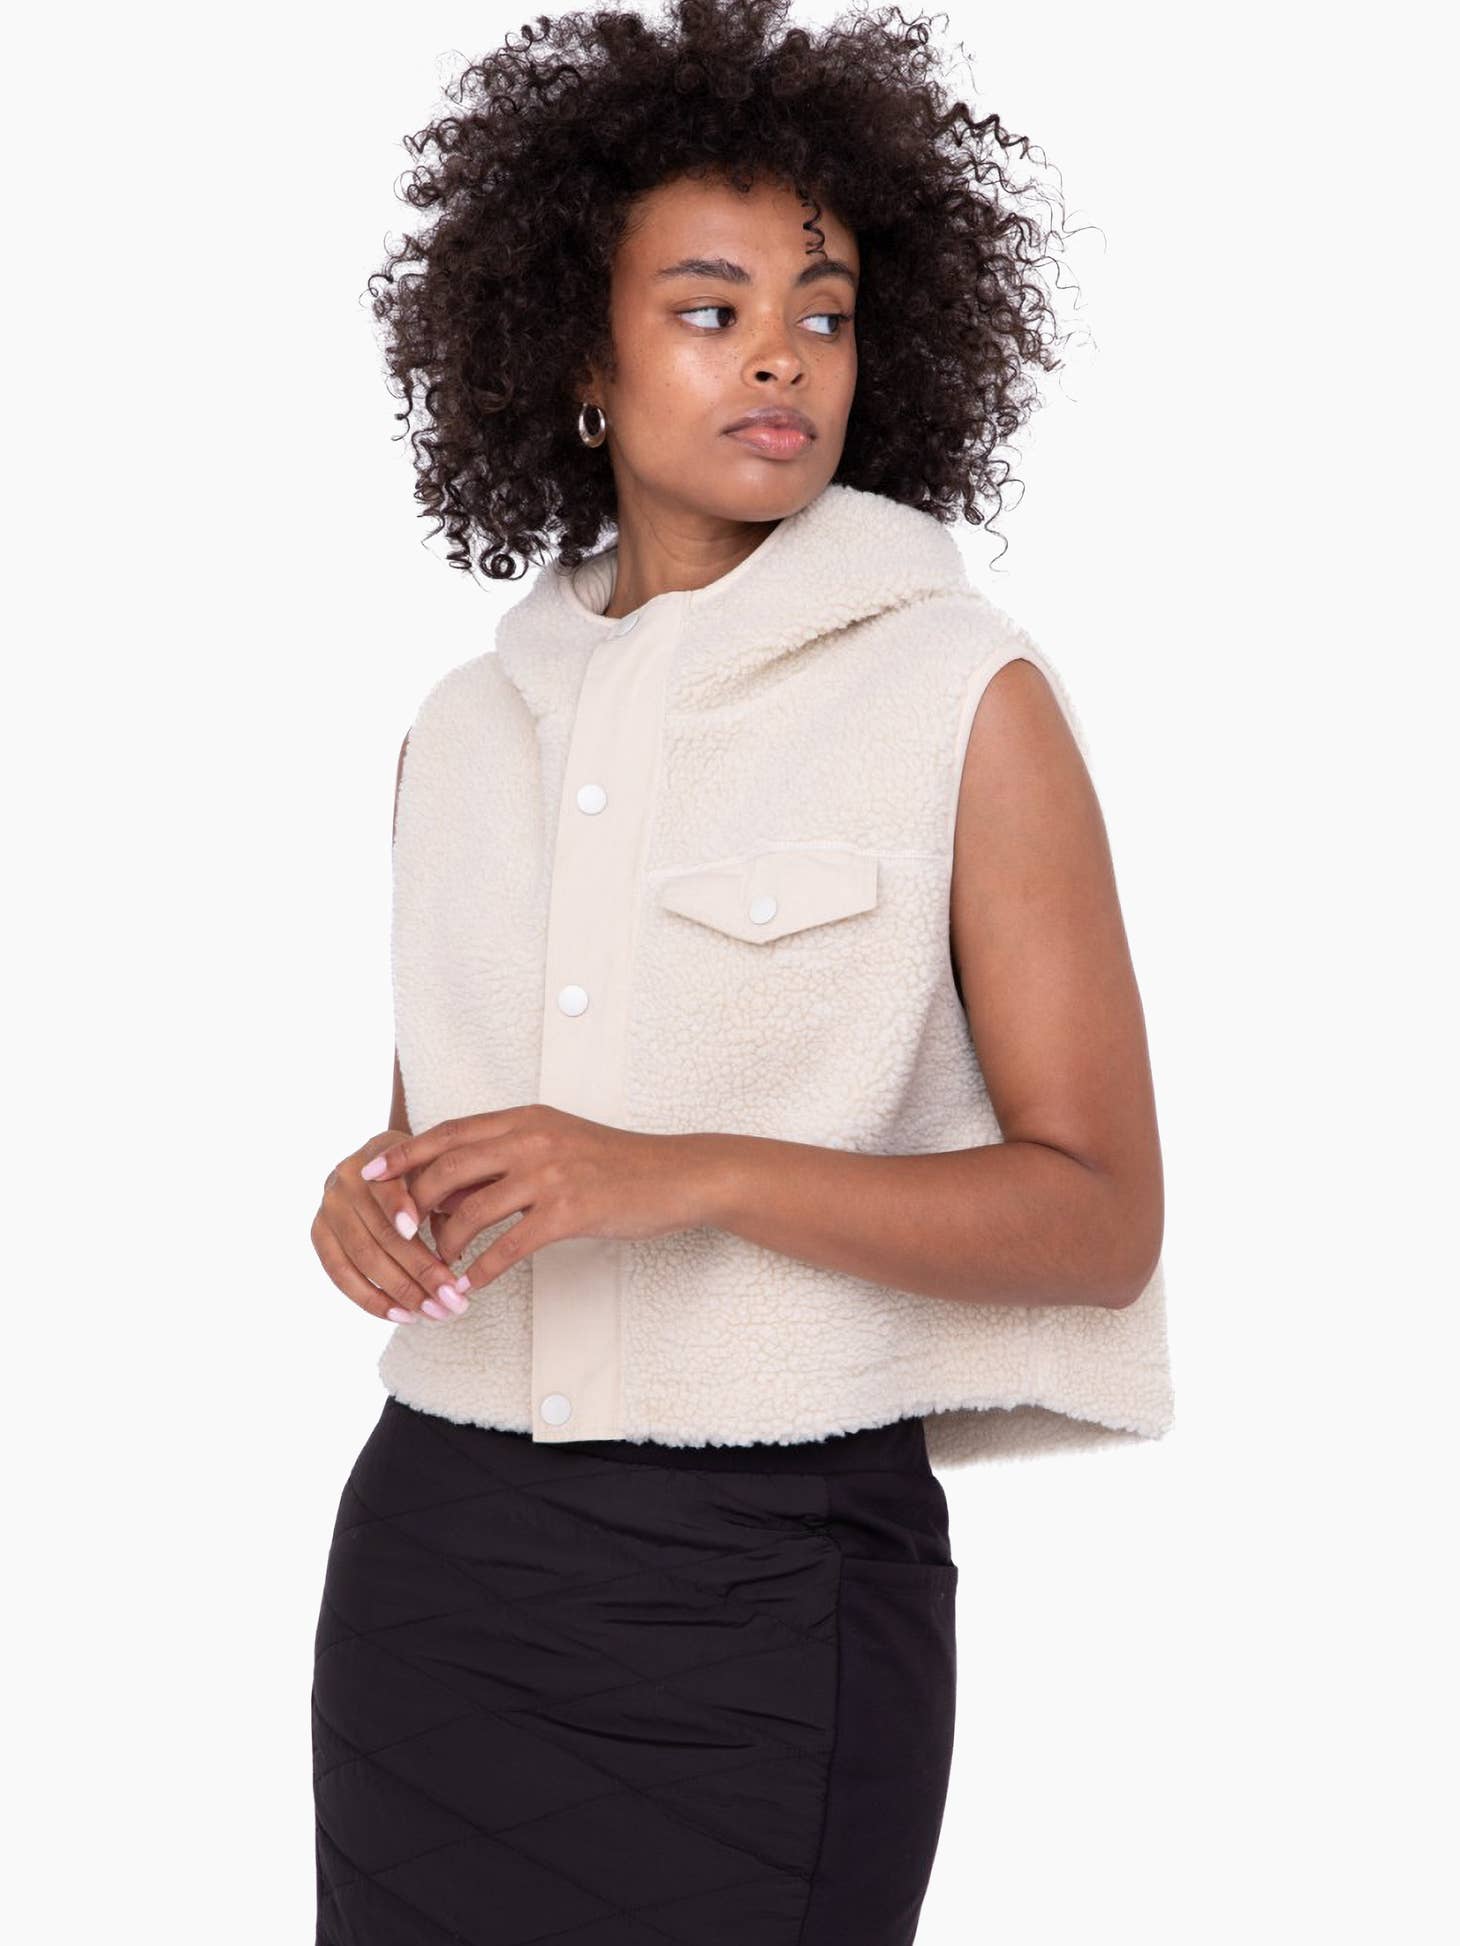 Model wearing Mono B Sherpa Cropped Hoodie vest wearing black skirt on a white background